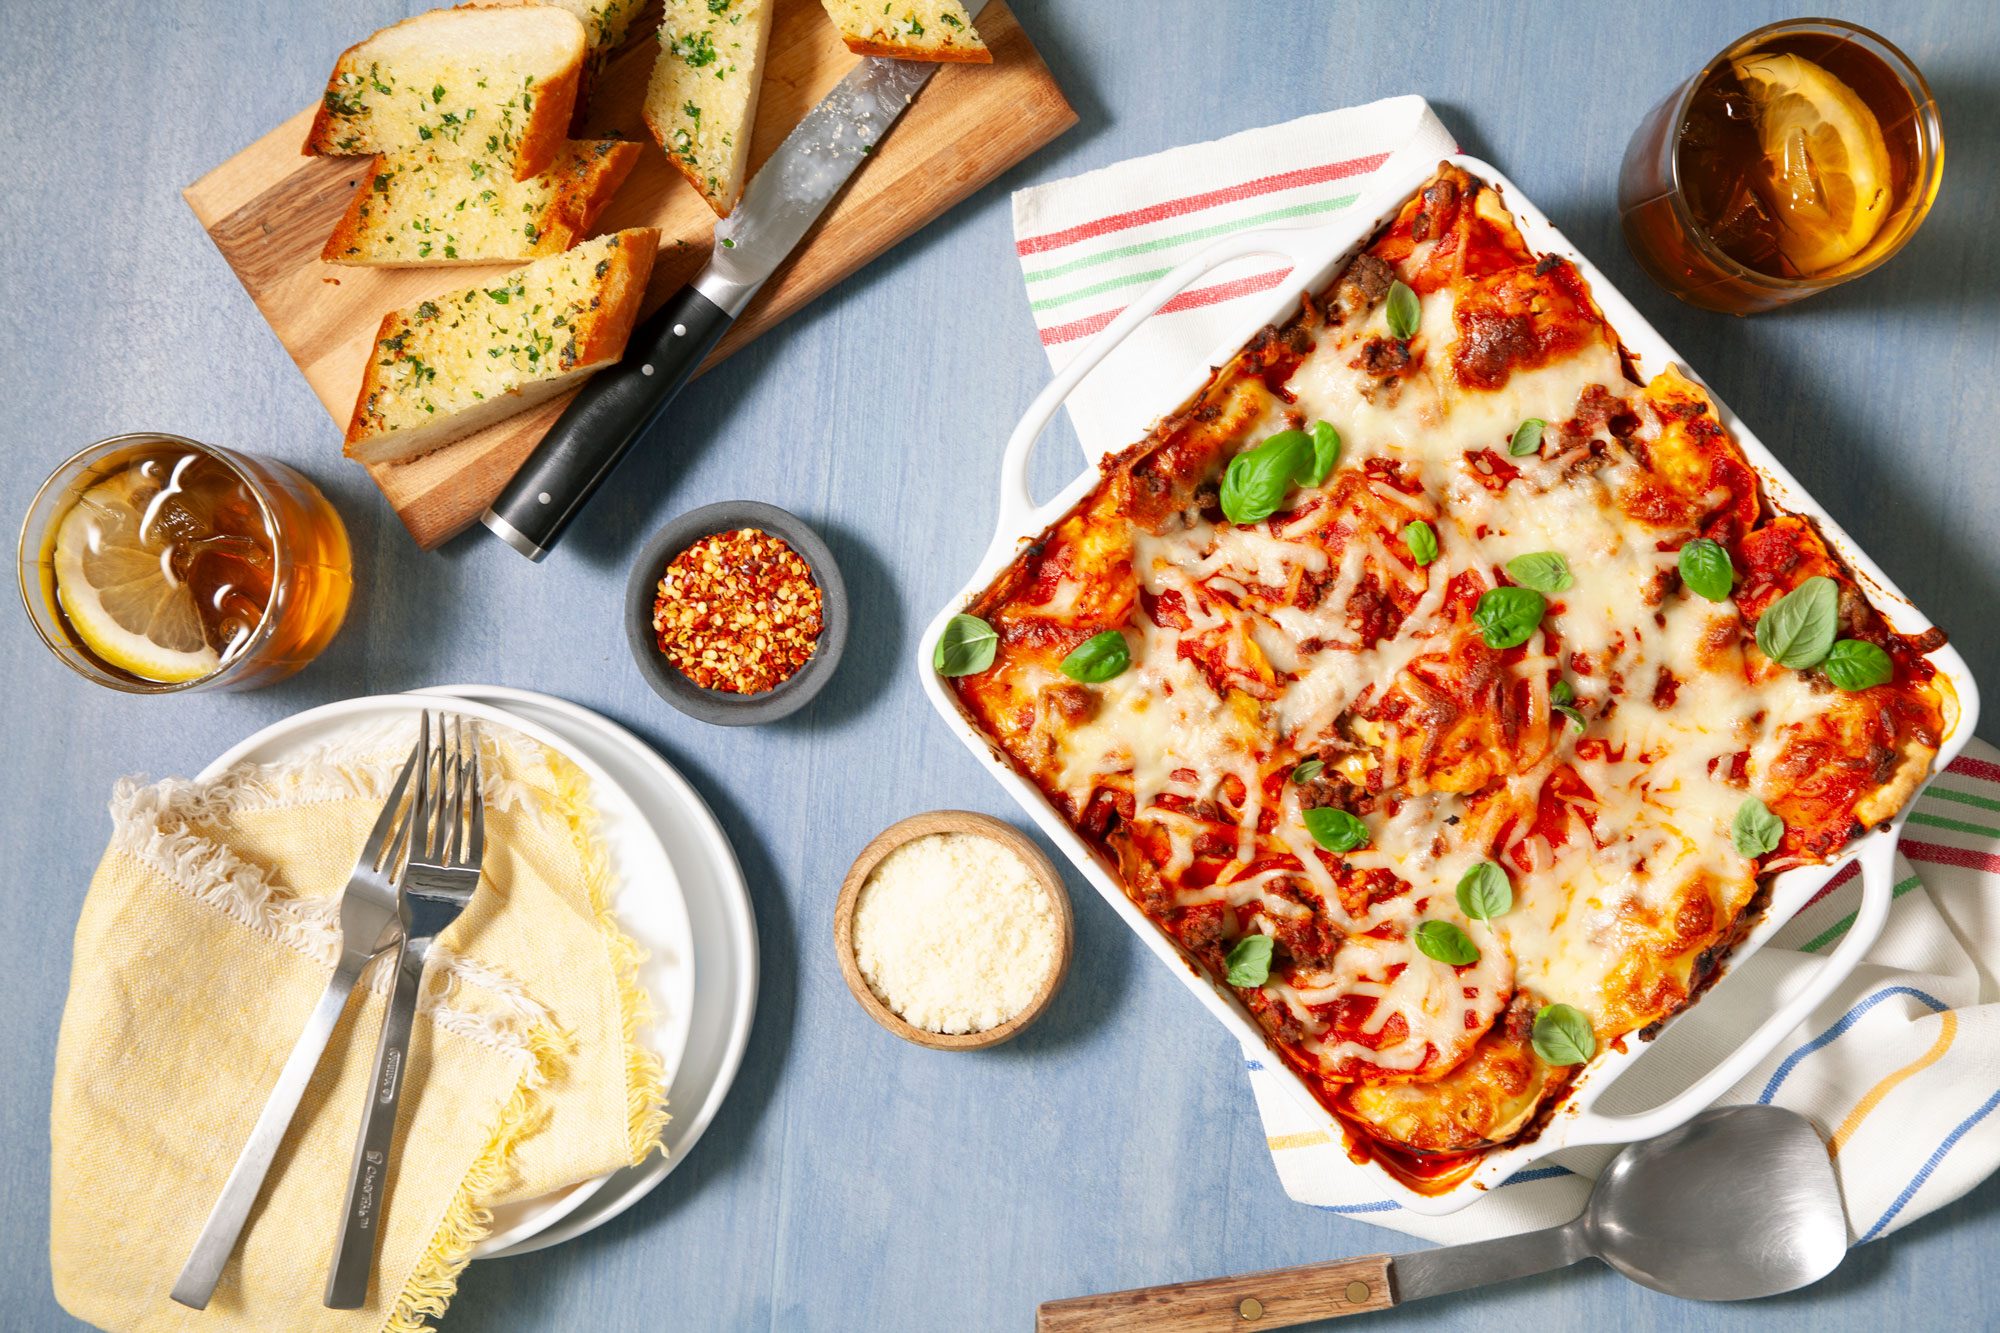 Ravioli Lasagna Recipe: How to Make It